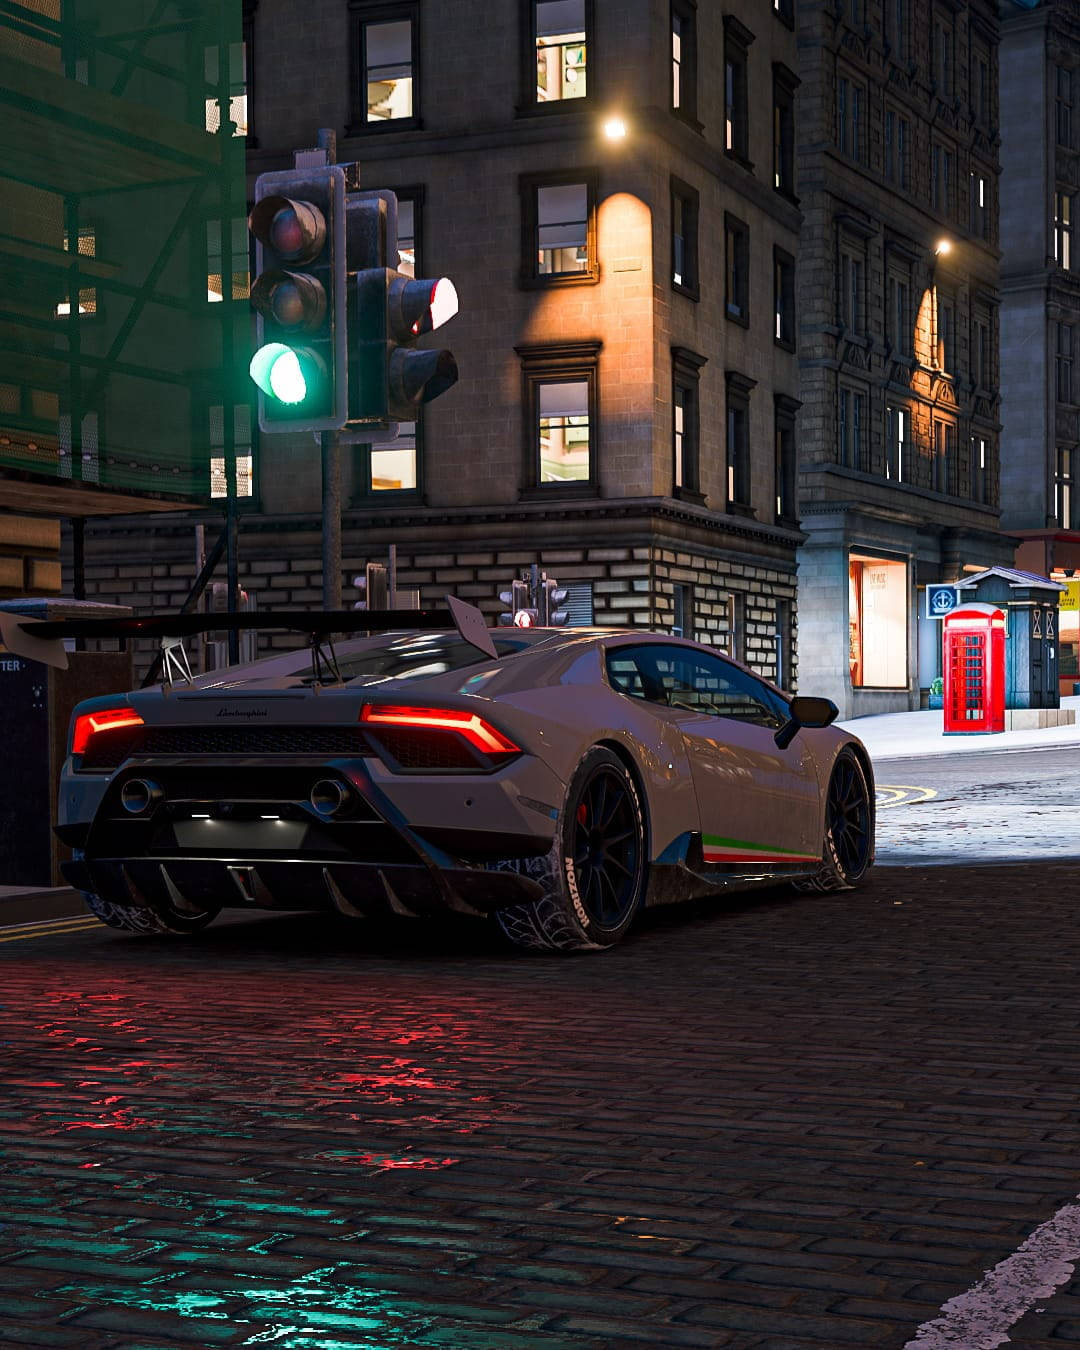 Caption: An exhilarating ride with Forza Horizon 4 - Lamborghini Huracan Performante Wallpaper